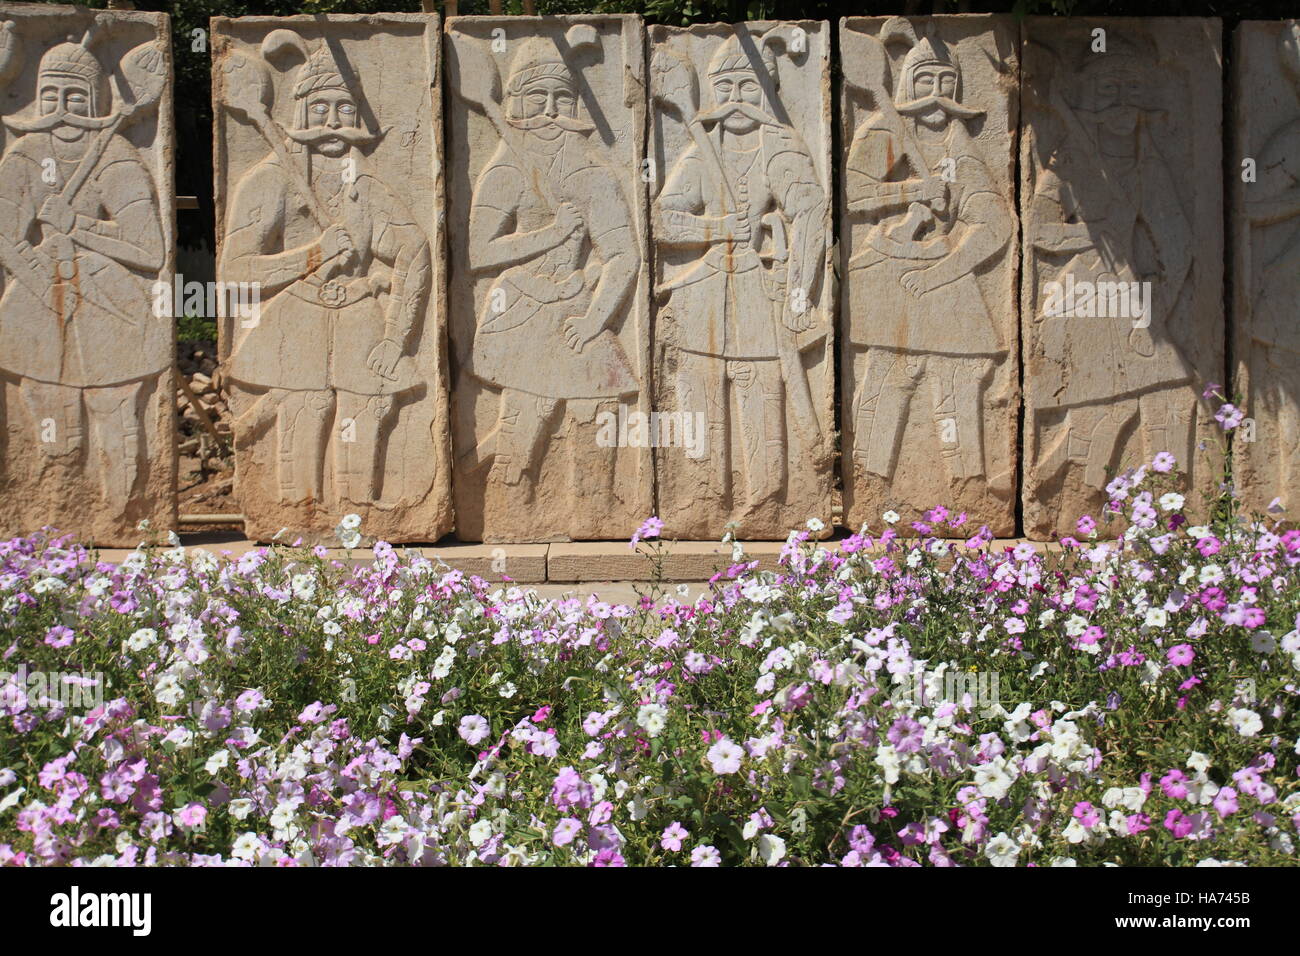 I plinti della parete del palazzo Khorshid (Sun Palace), le leggendarie figure di Shahnameh, Qajar era. Bagh-e Nazar museum, Shiraz. Foto Stock